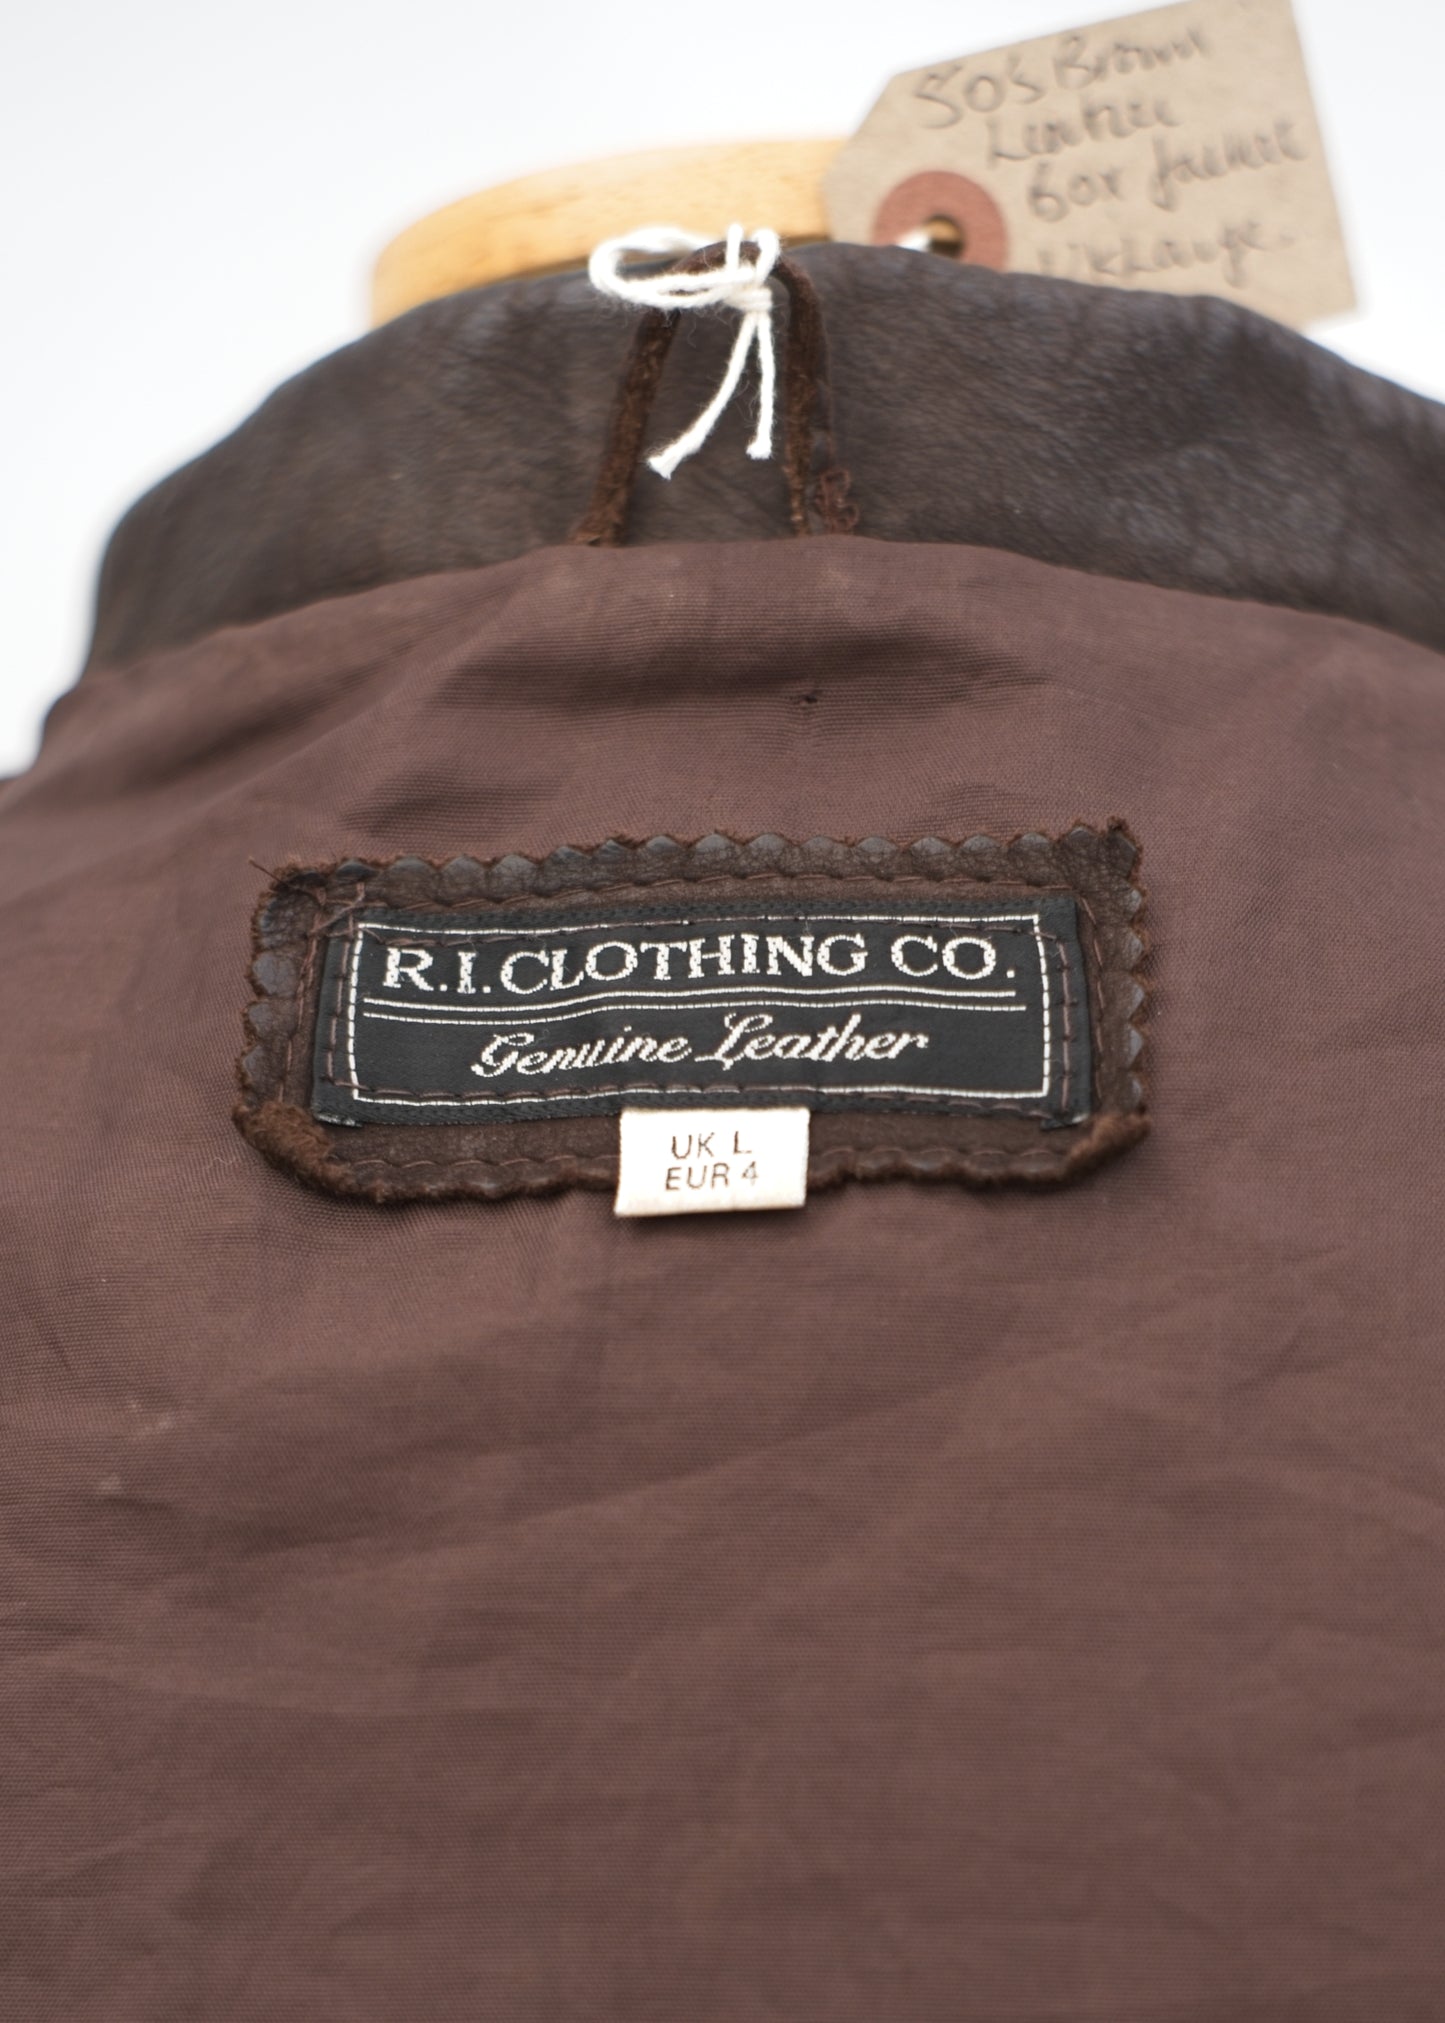 Vintage 60s Brown Suede Leather Box Jacket • 44" - 46"